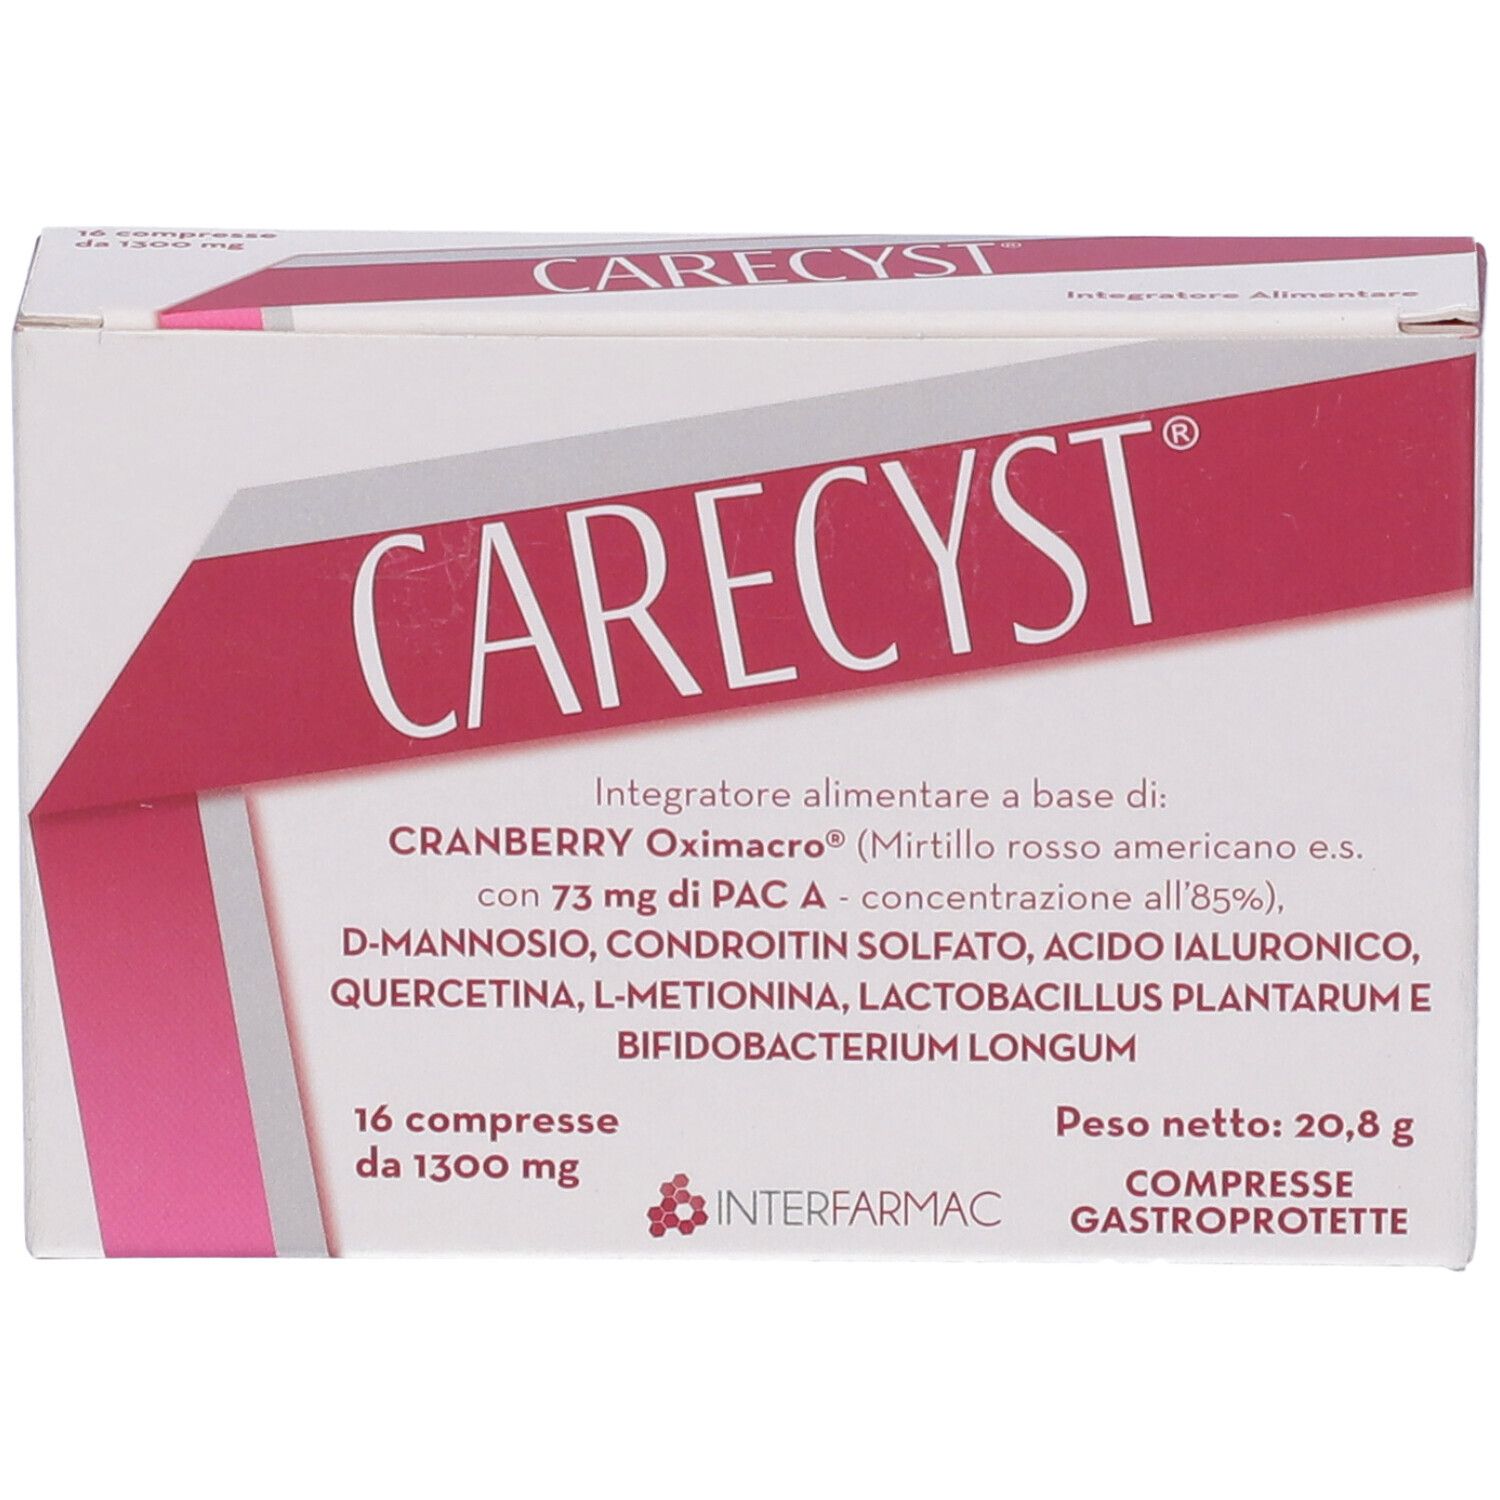 Carecyst 16 Compresse Gastroprotette